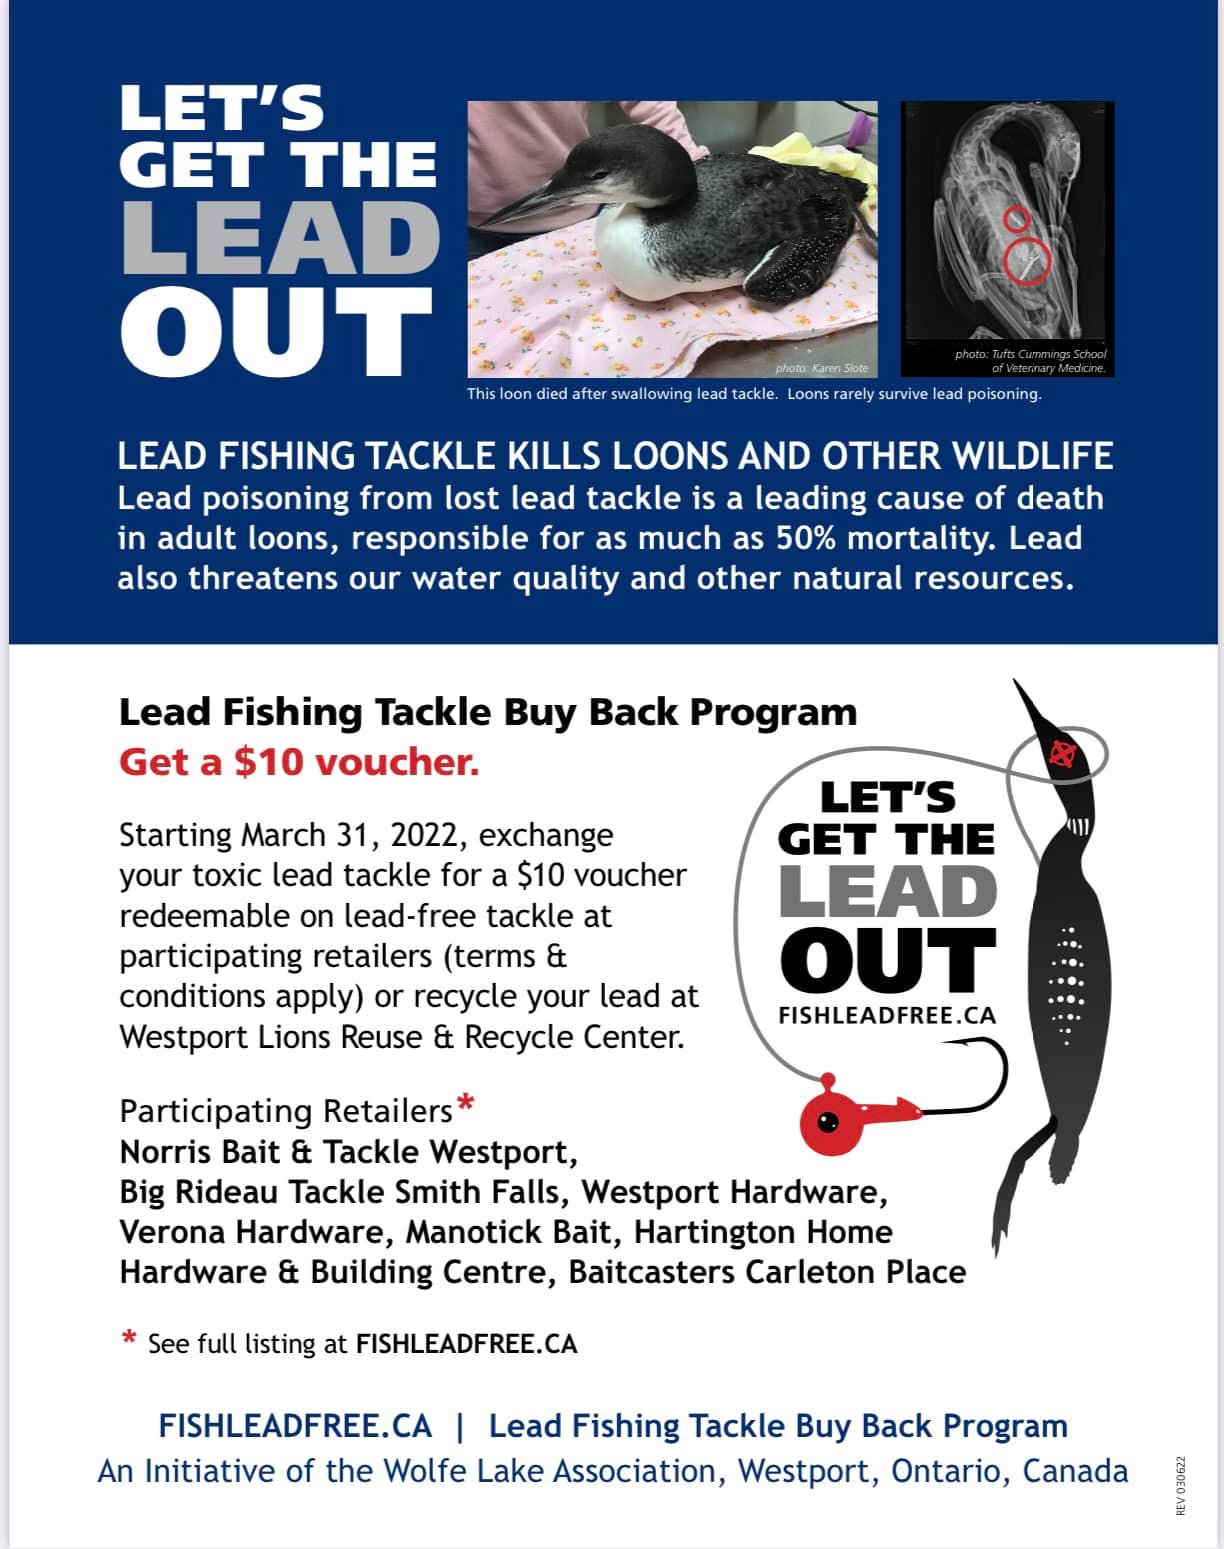 Wolfe Lake Association's Lead Fishing Tackle Buy Back Program - South  Frontenac